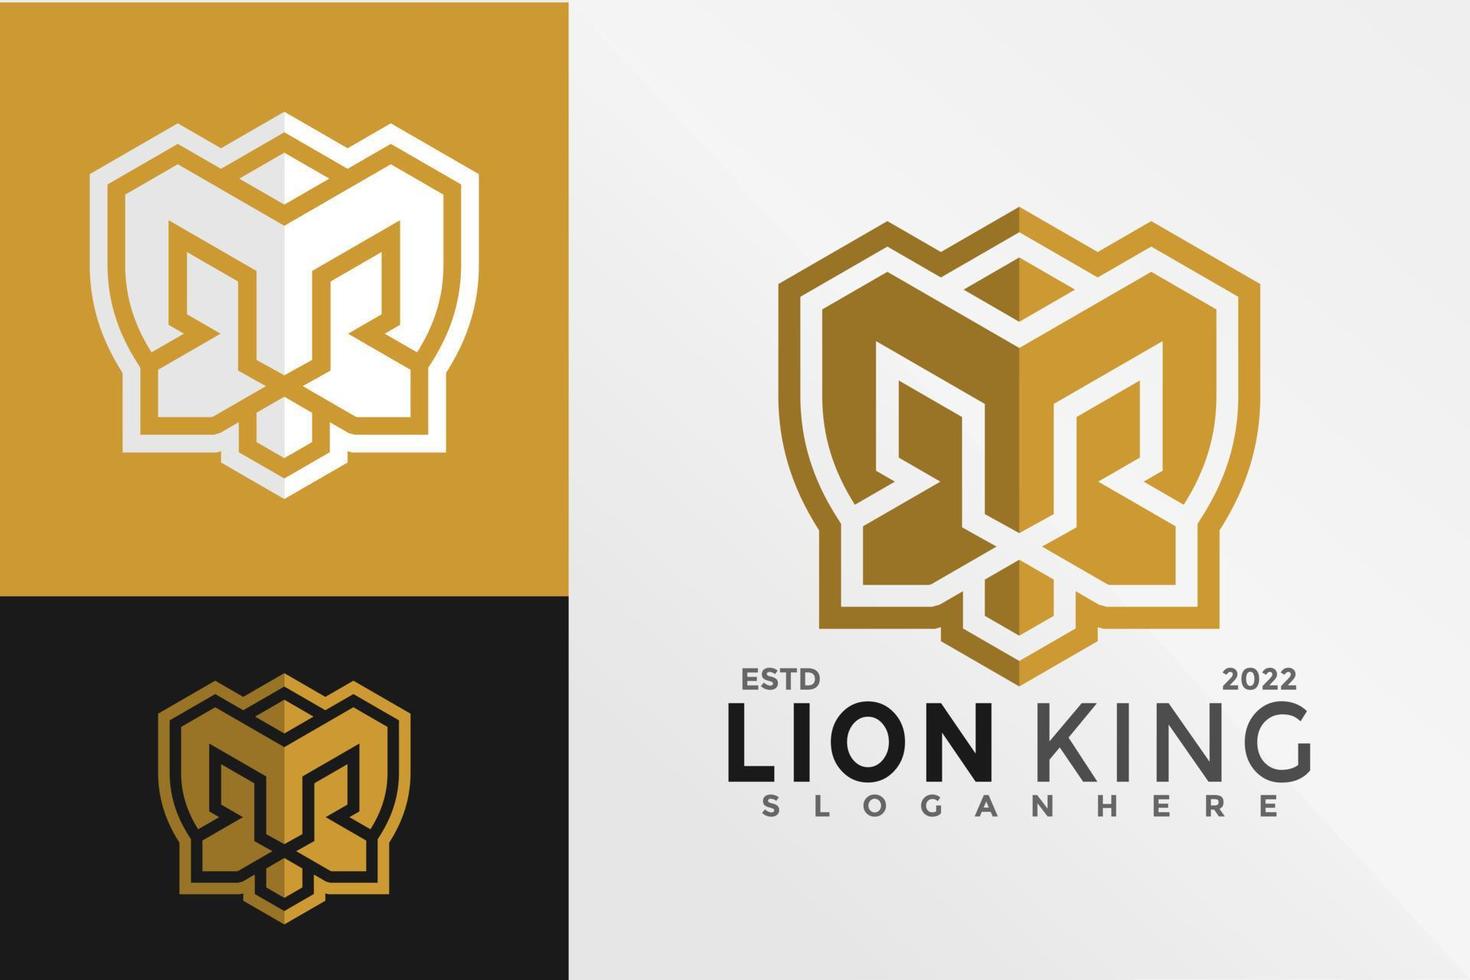 Buchstabe m König der Löwen-Logo-Design-Vektor-Illustration-Vorlage vektor